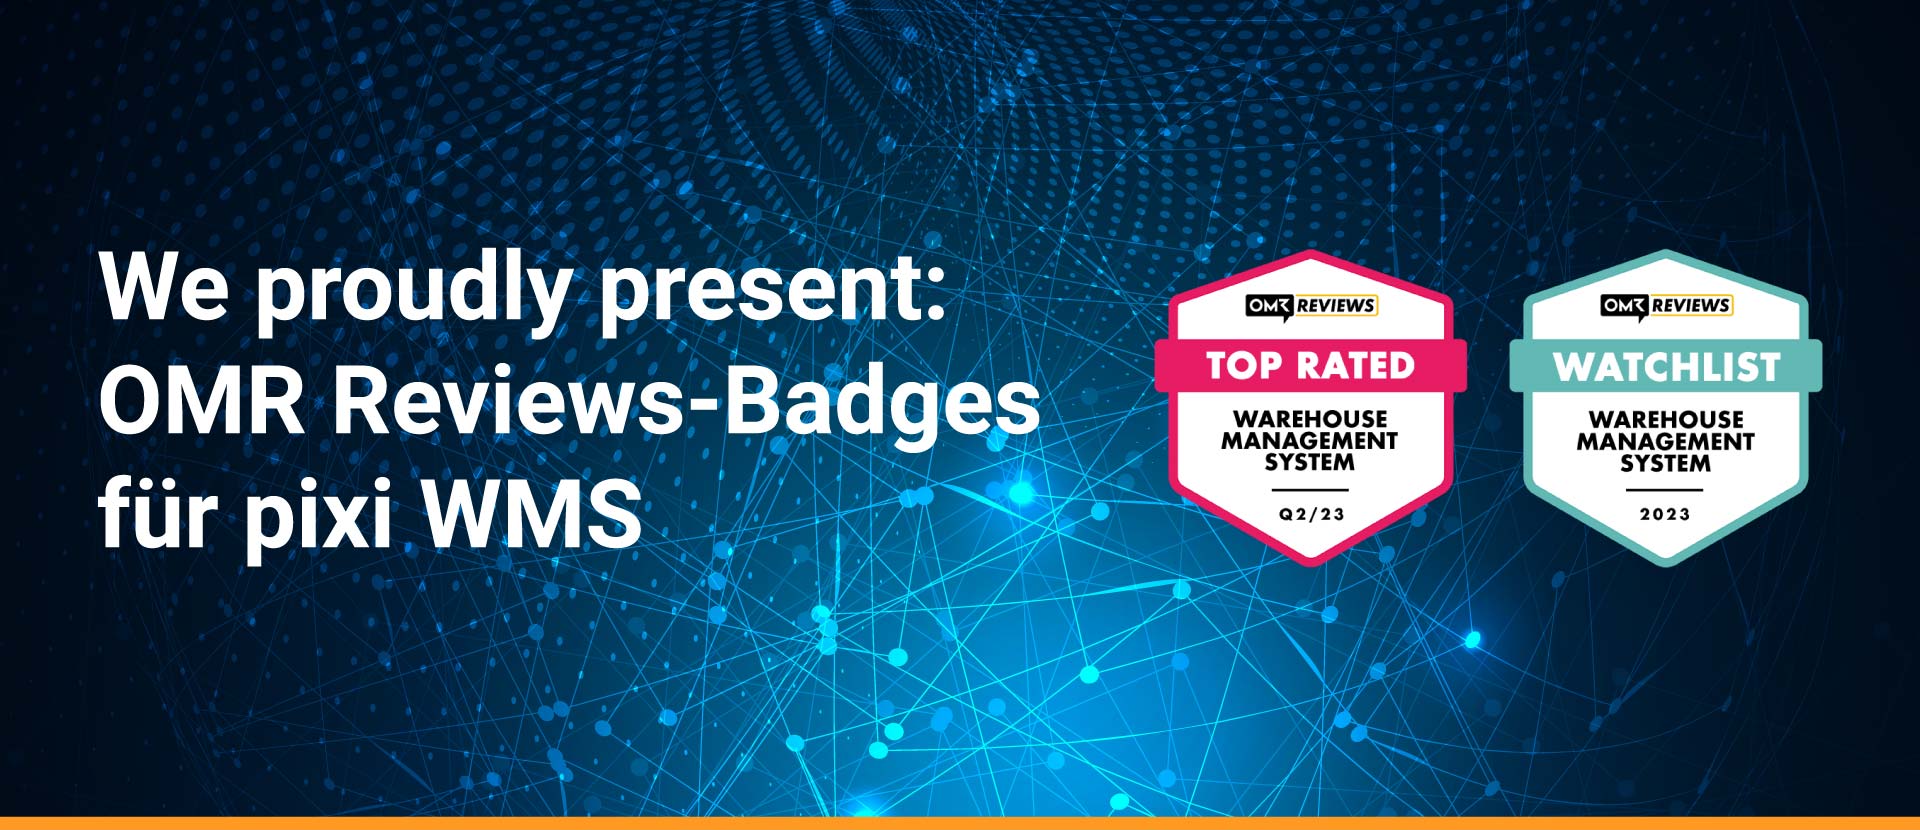 We proudly present: OMR Reviews-Badges für pixi WMS